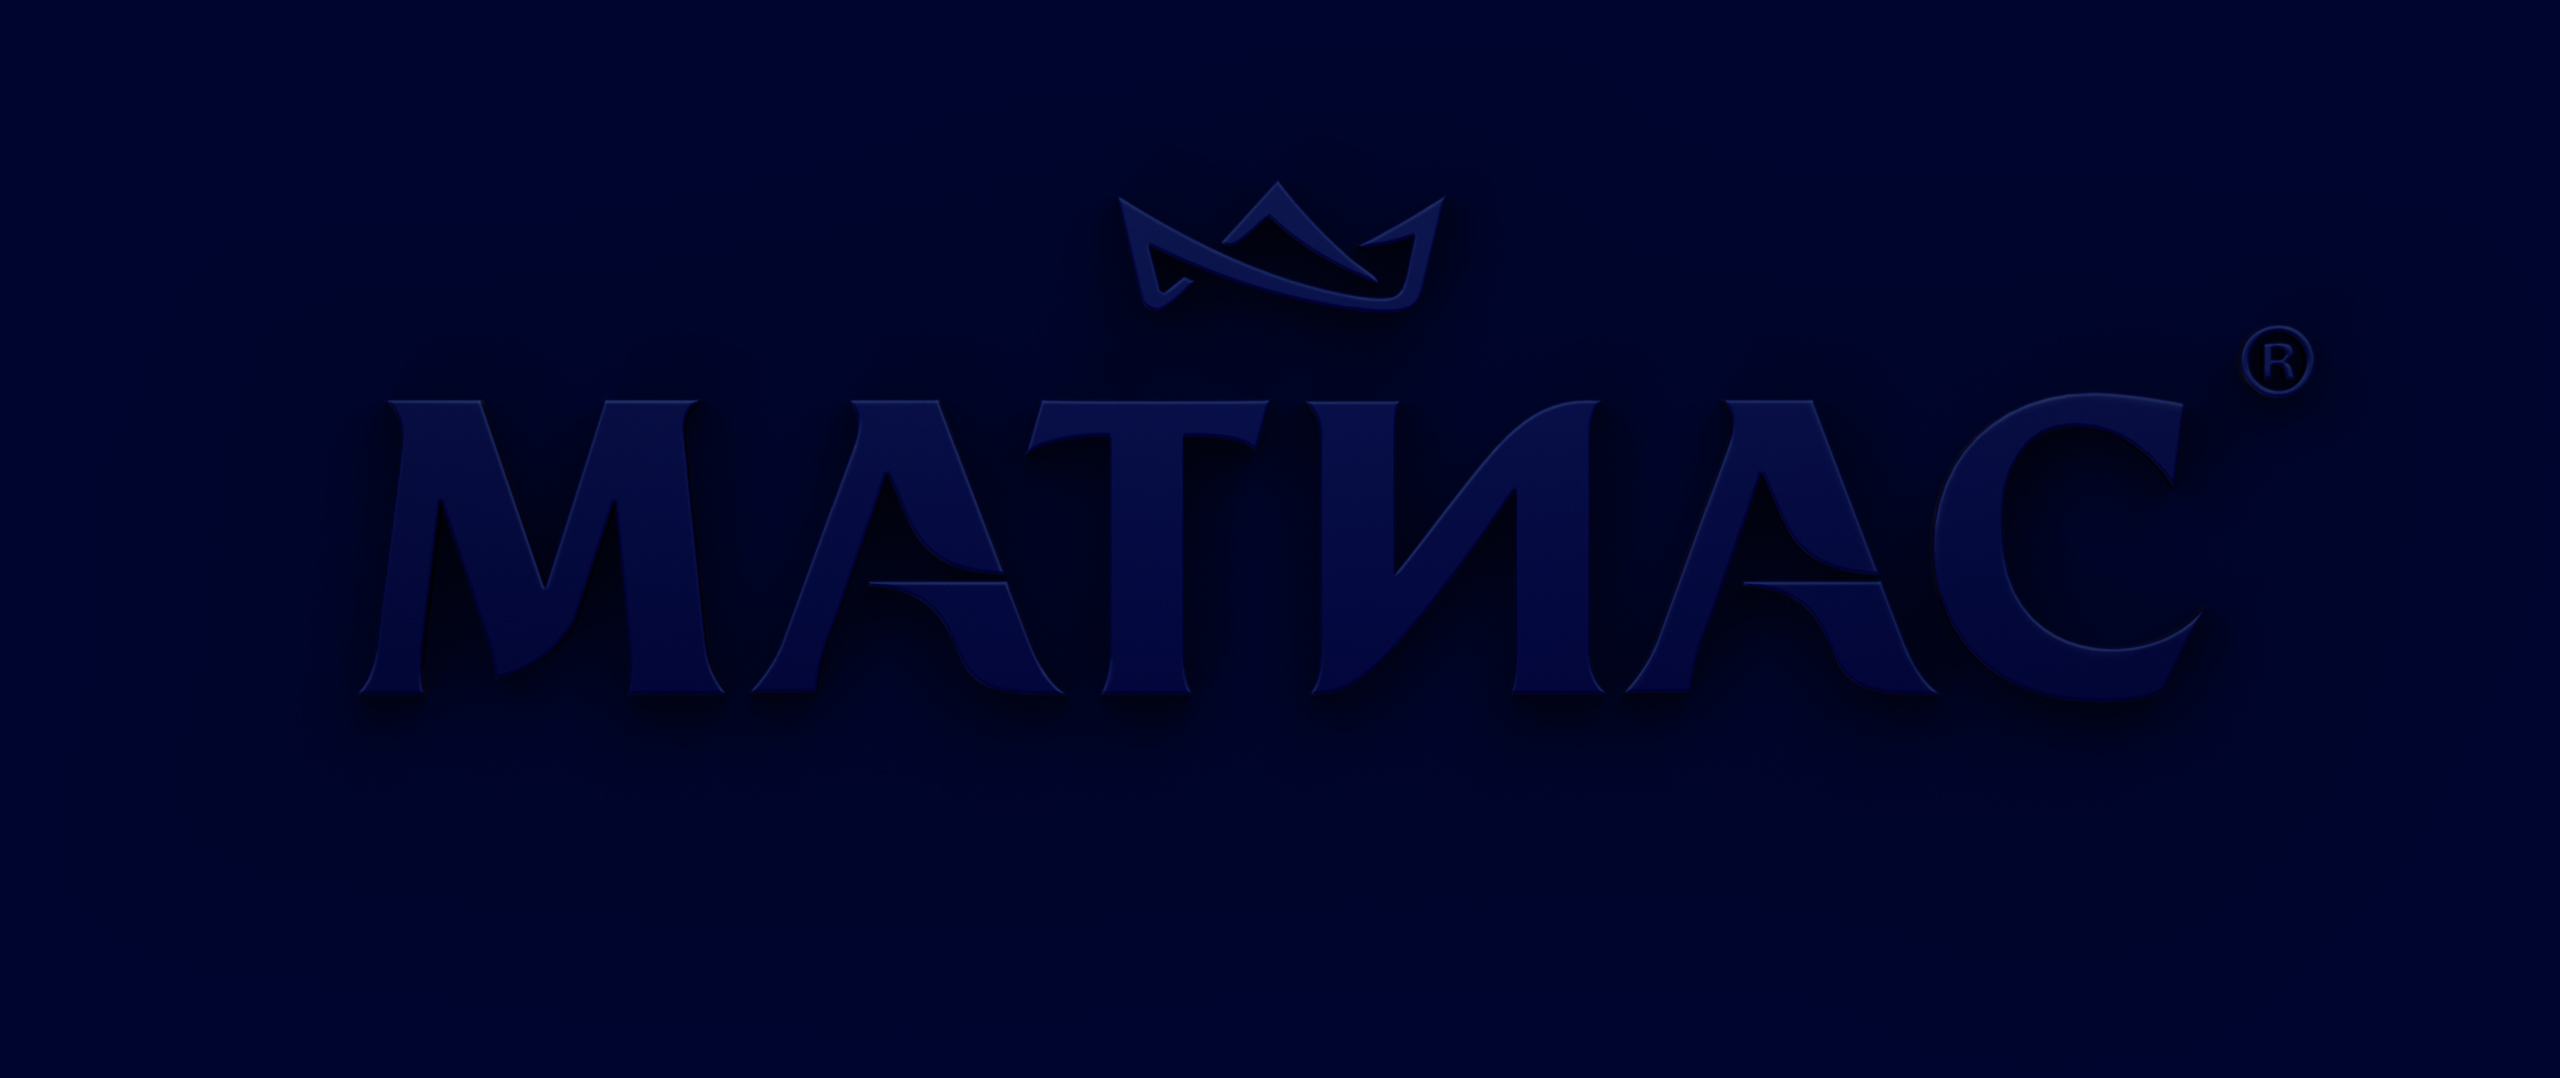 mattias-logo-dark.jpg